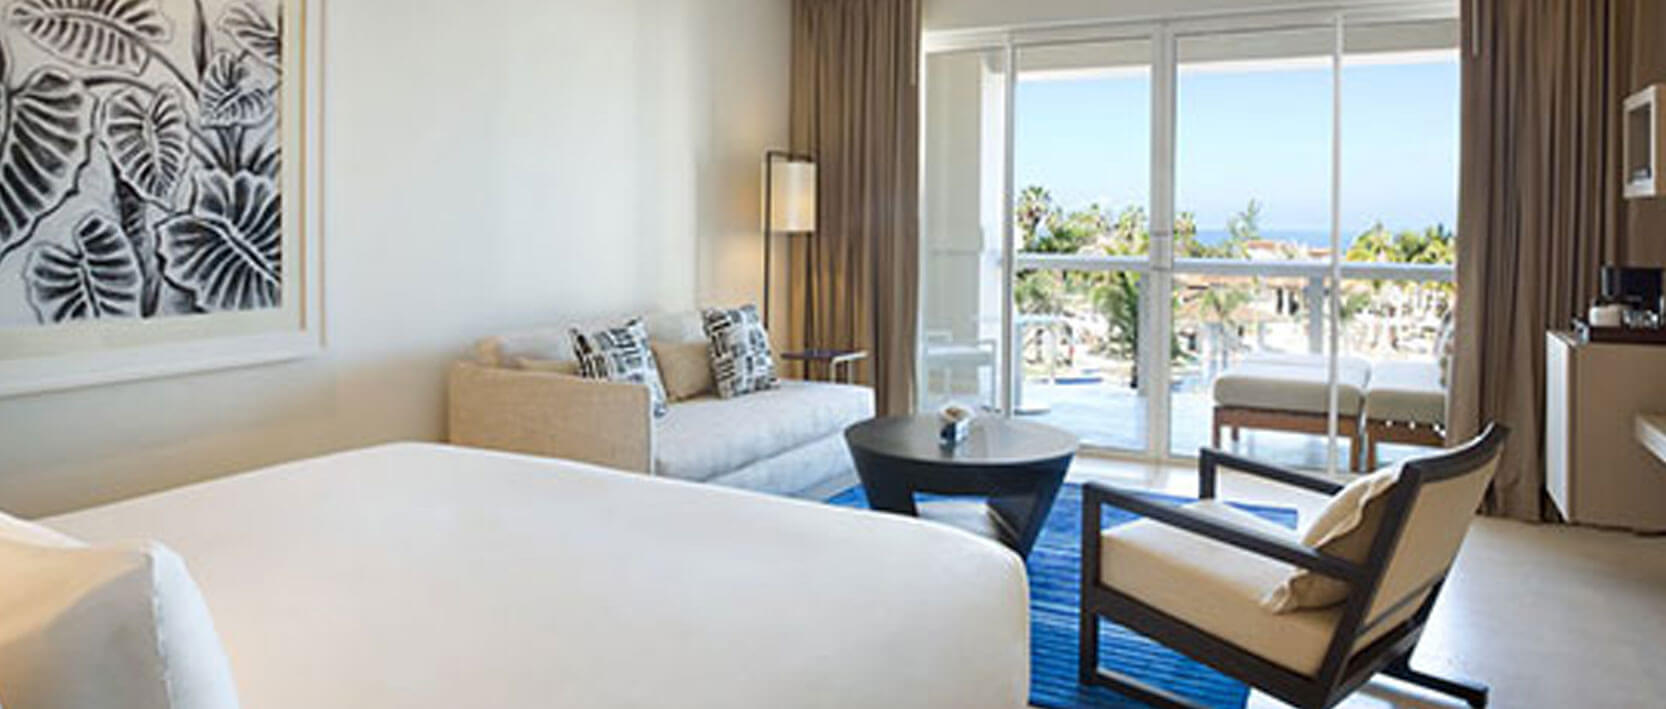 Hyatt Zilara Rose Hall Accommodations - Ocean View Junior Suite King